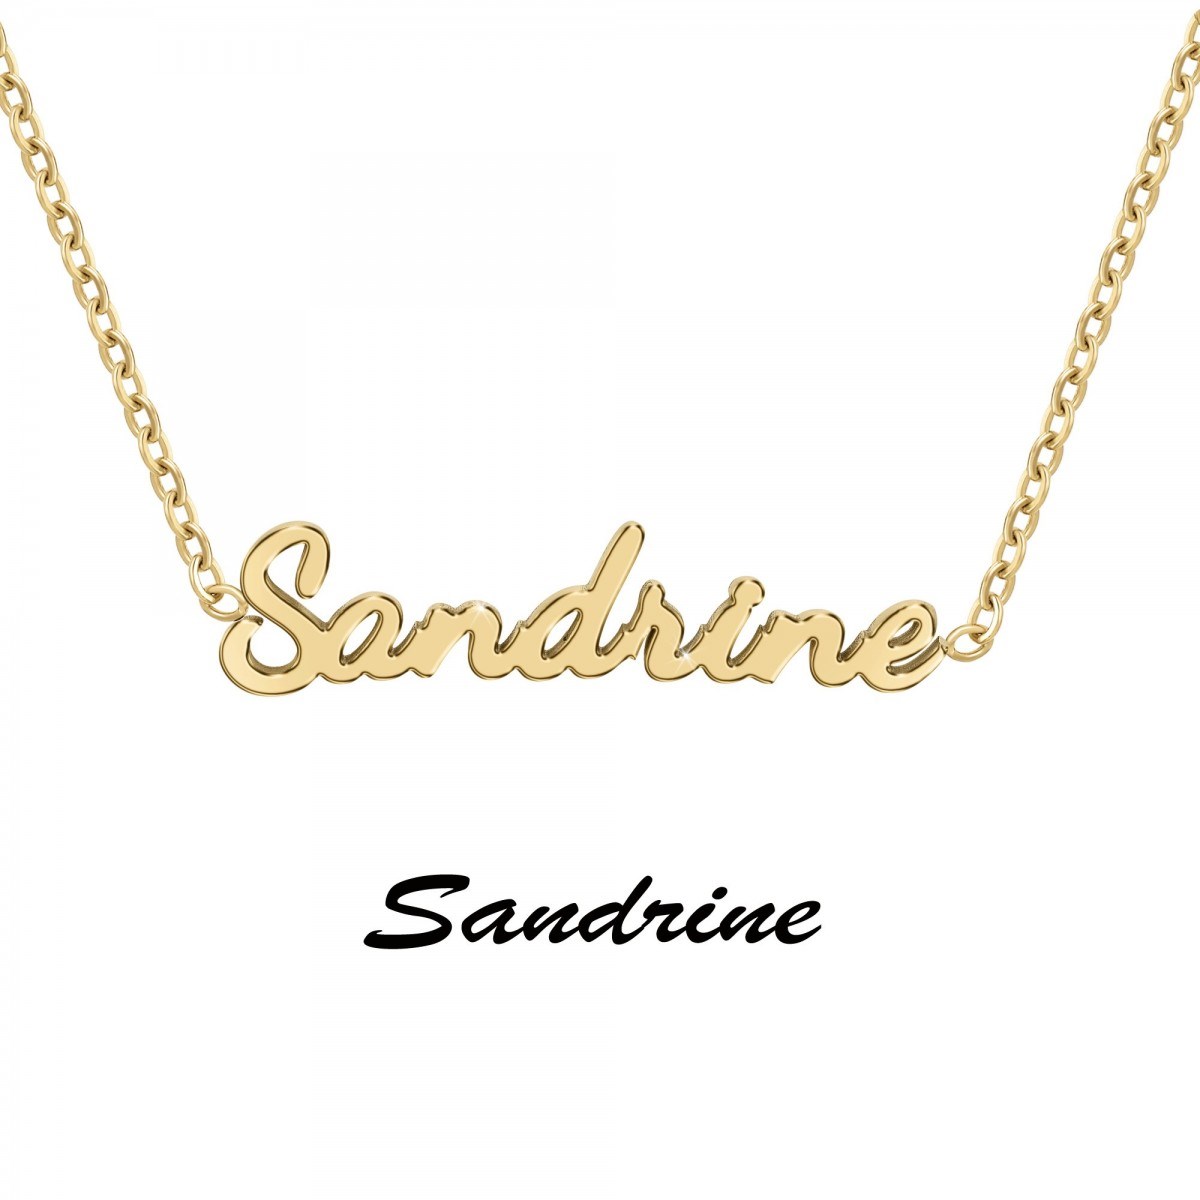 Sandrine - Collier prénom - vue 3